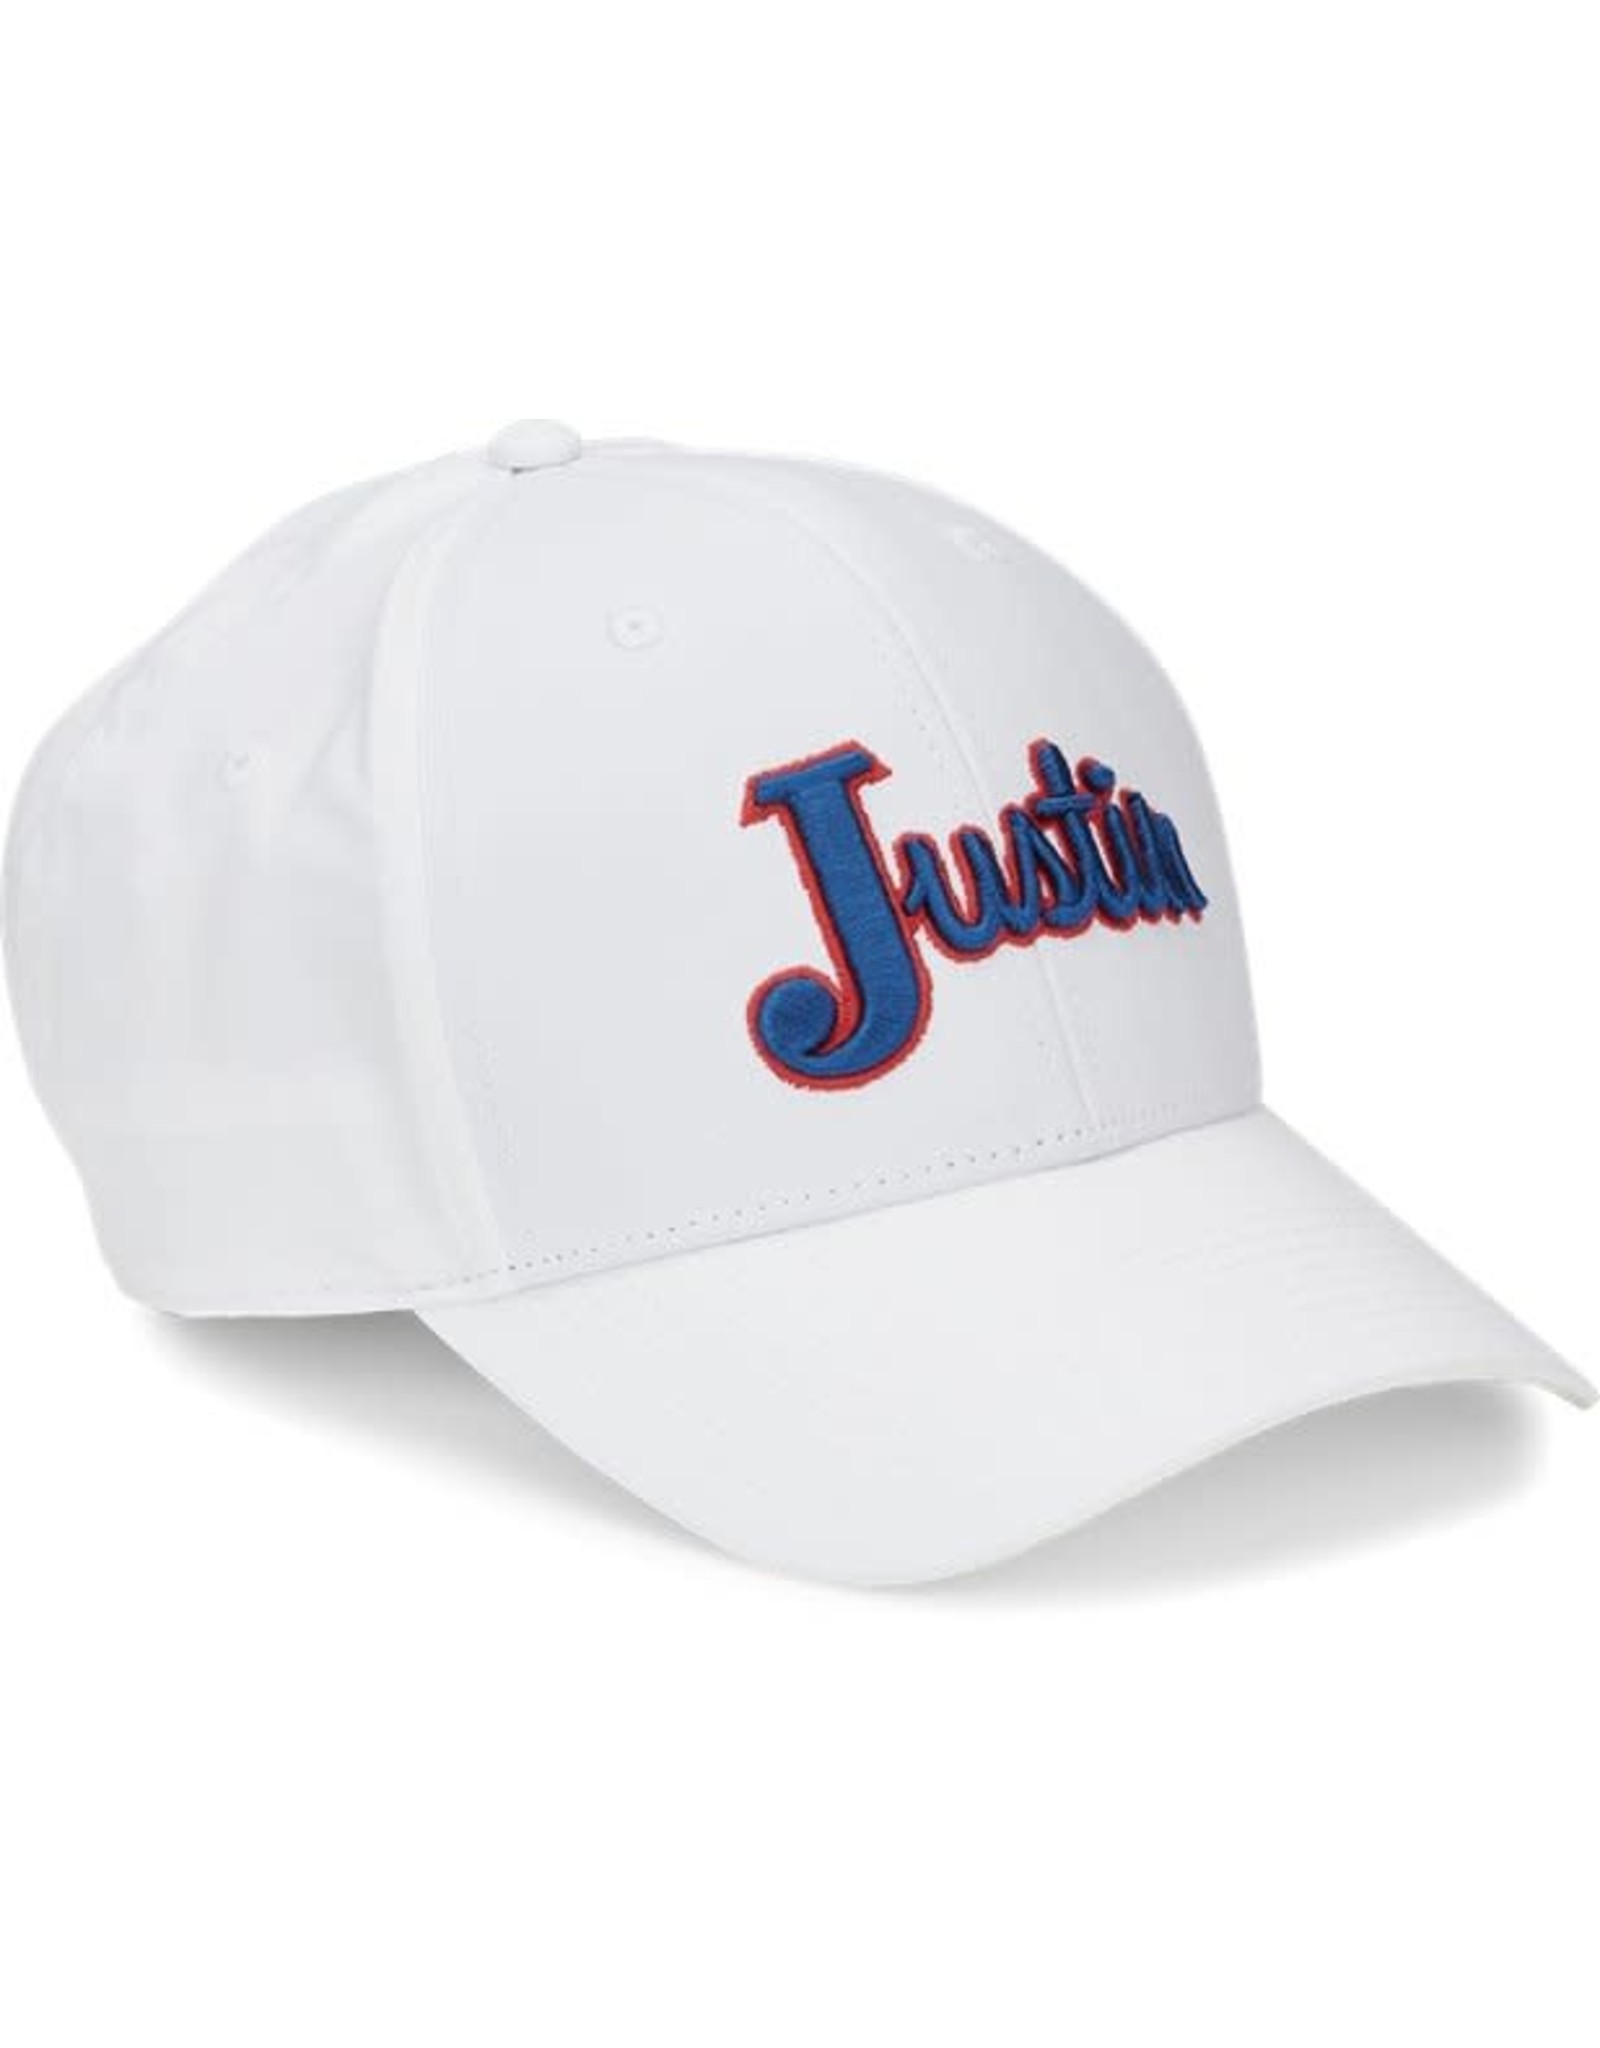 Justin Justin White/Navy/Red Logo Cap JCBC722-WHT